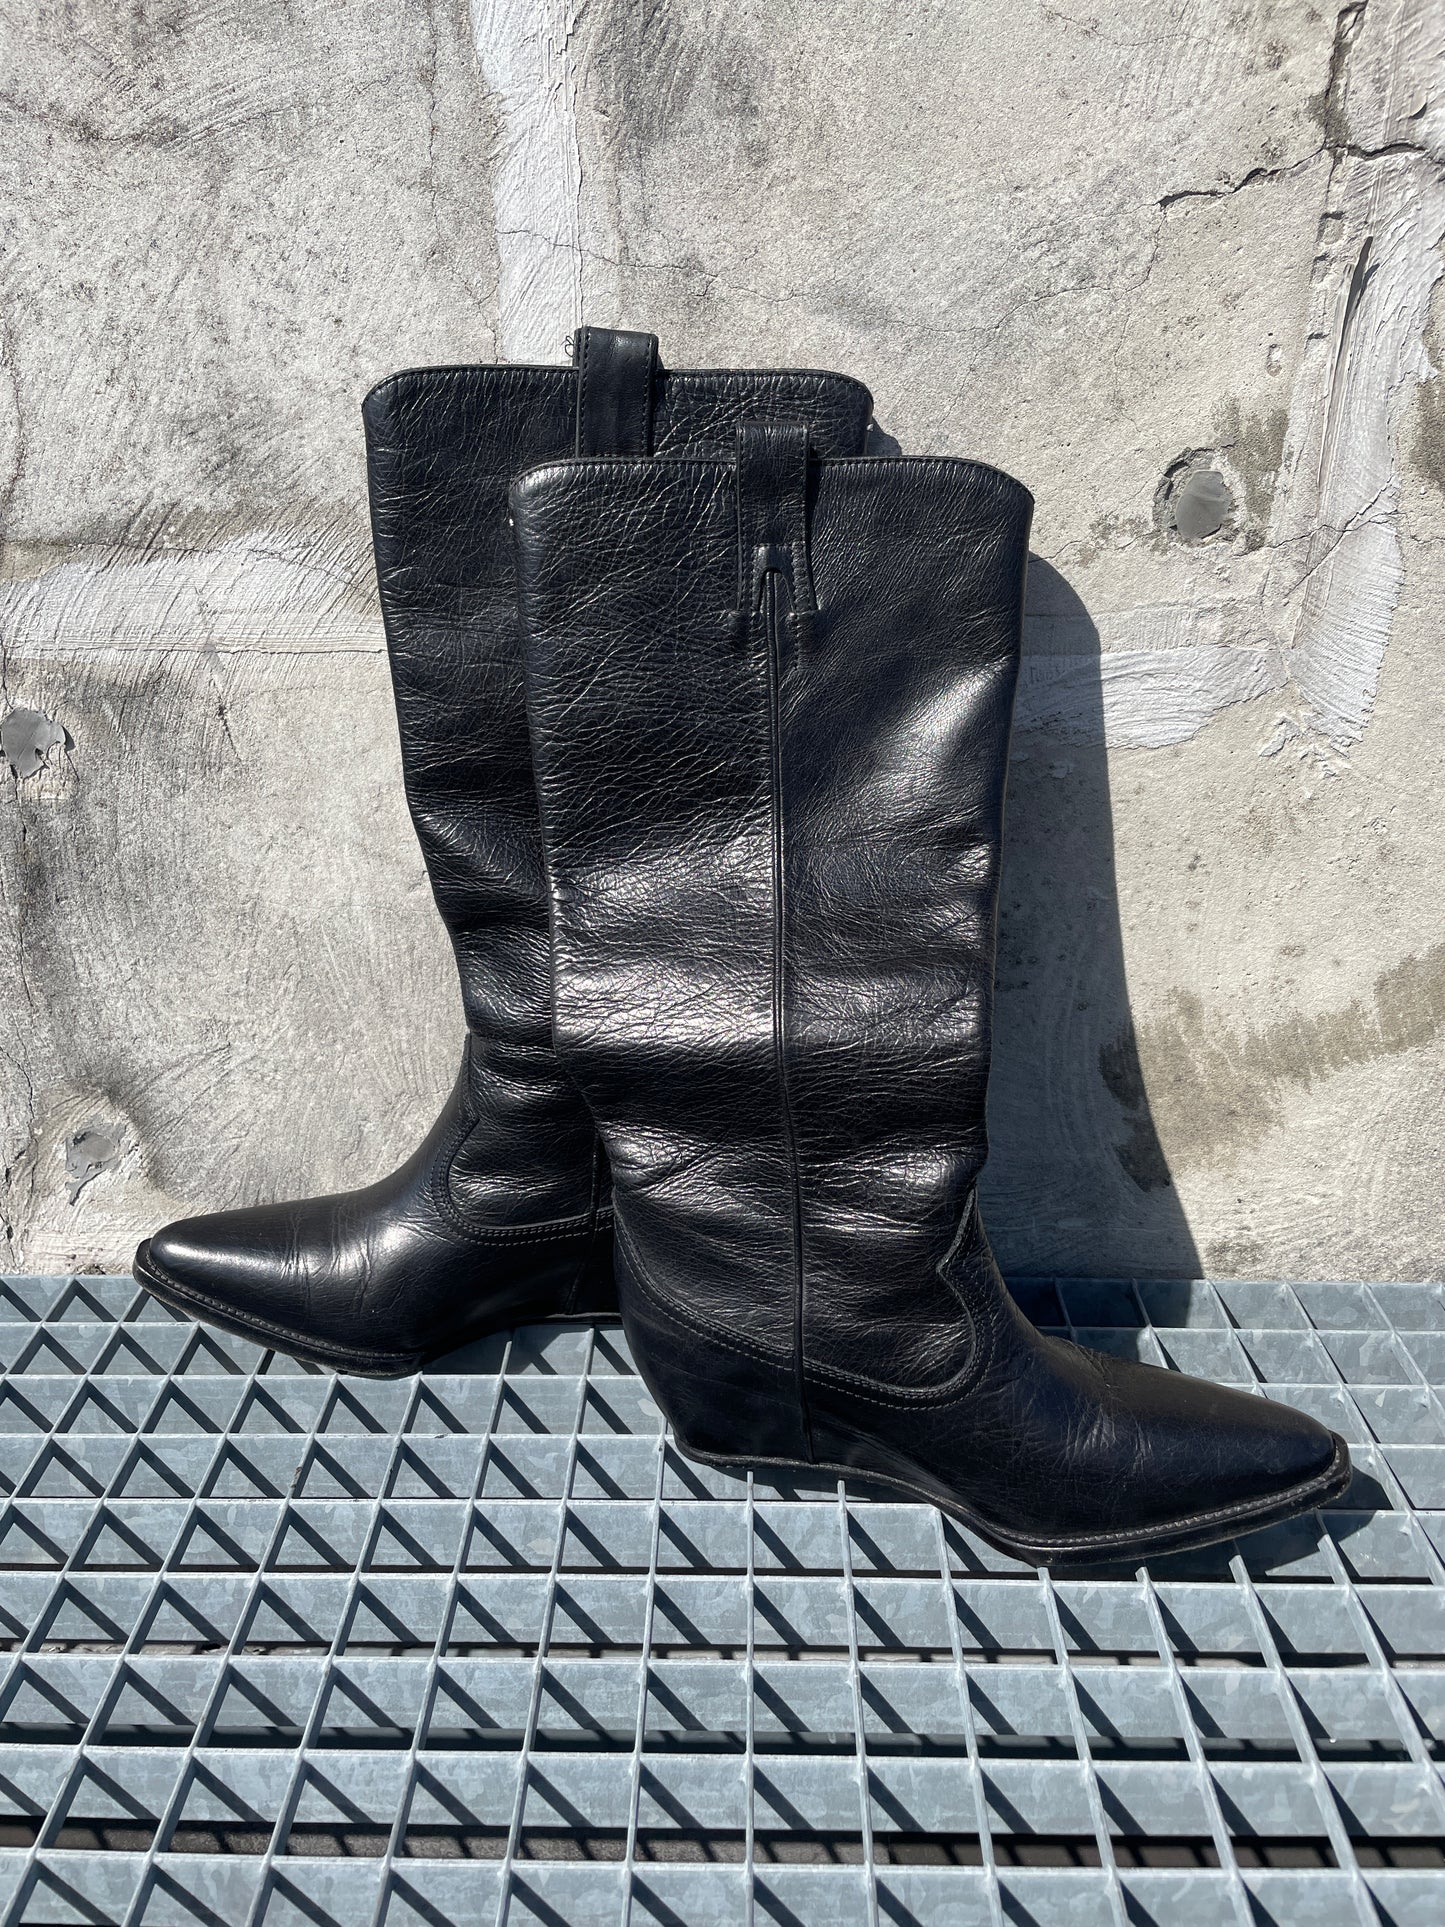 Martin Margiela platform black leather cowboy boots size 35 (fit like 36)